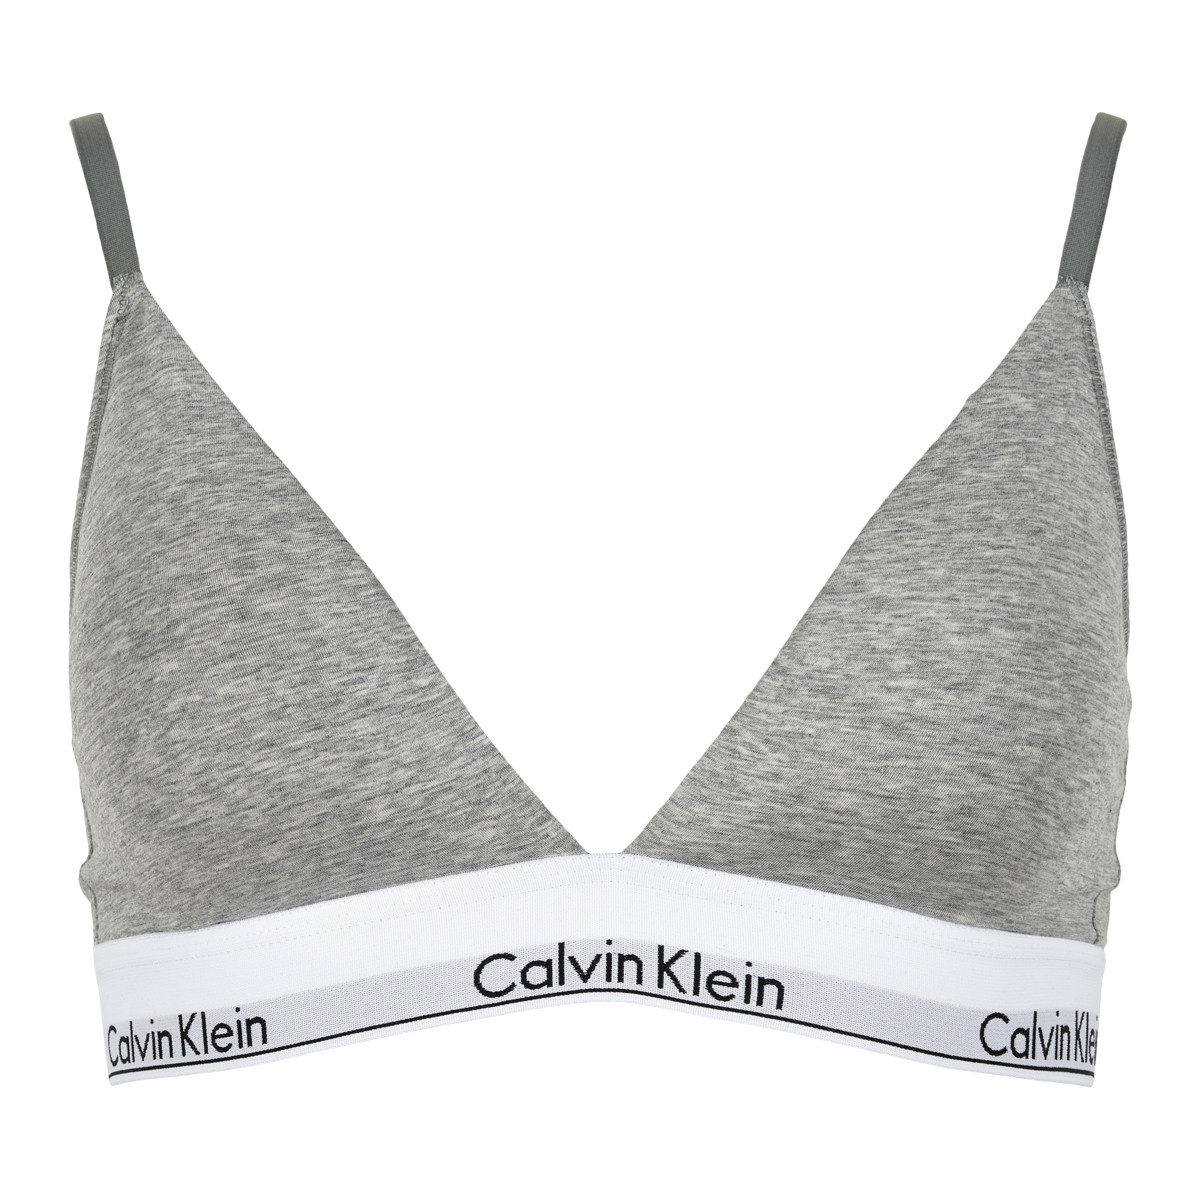 Calvin Klein • KLEIN LINGERI TRIANGLE BH 020 • Pris kr. 280